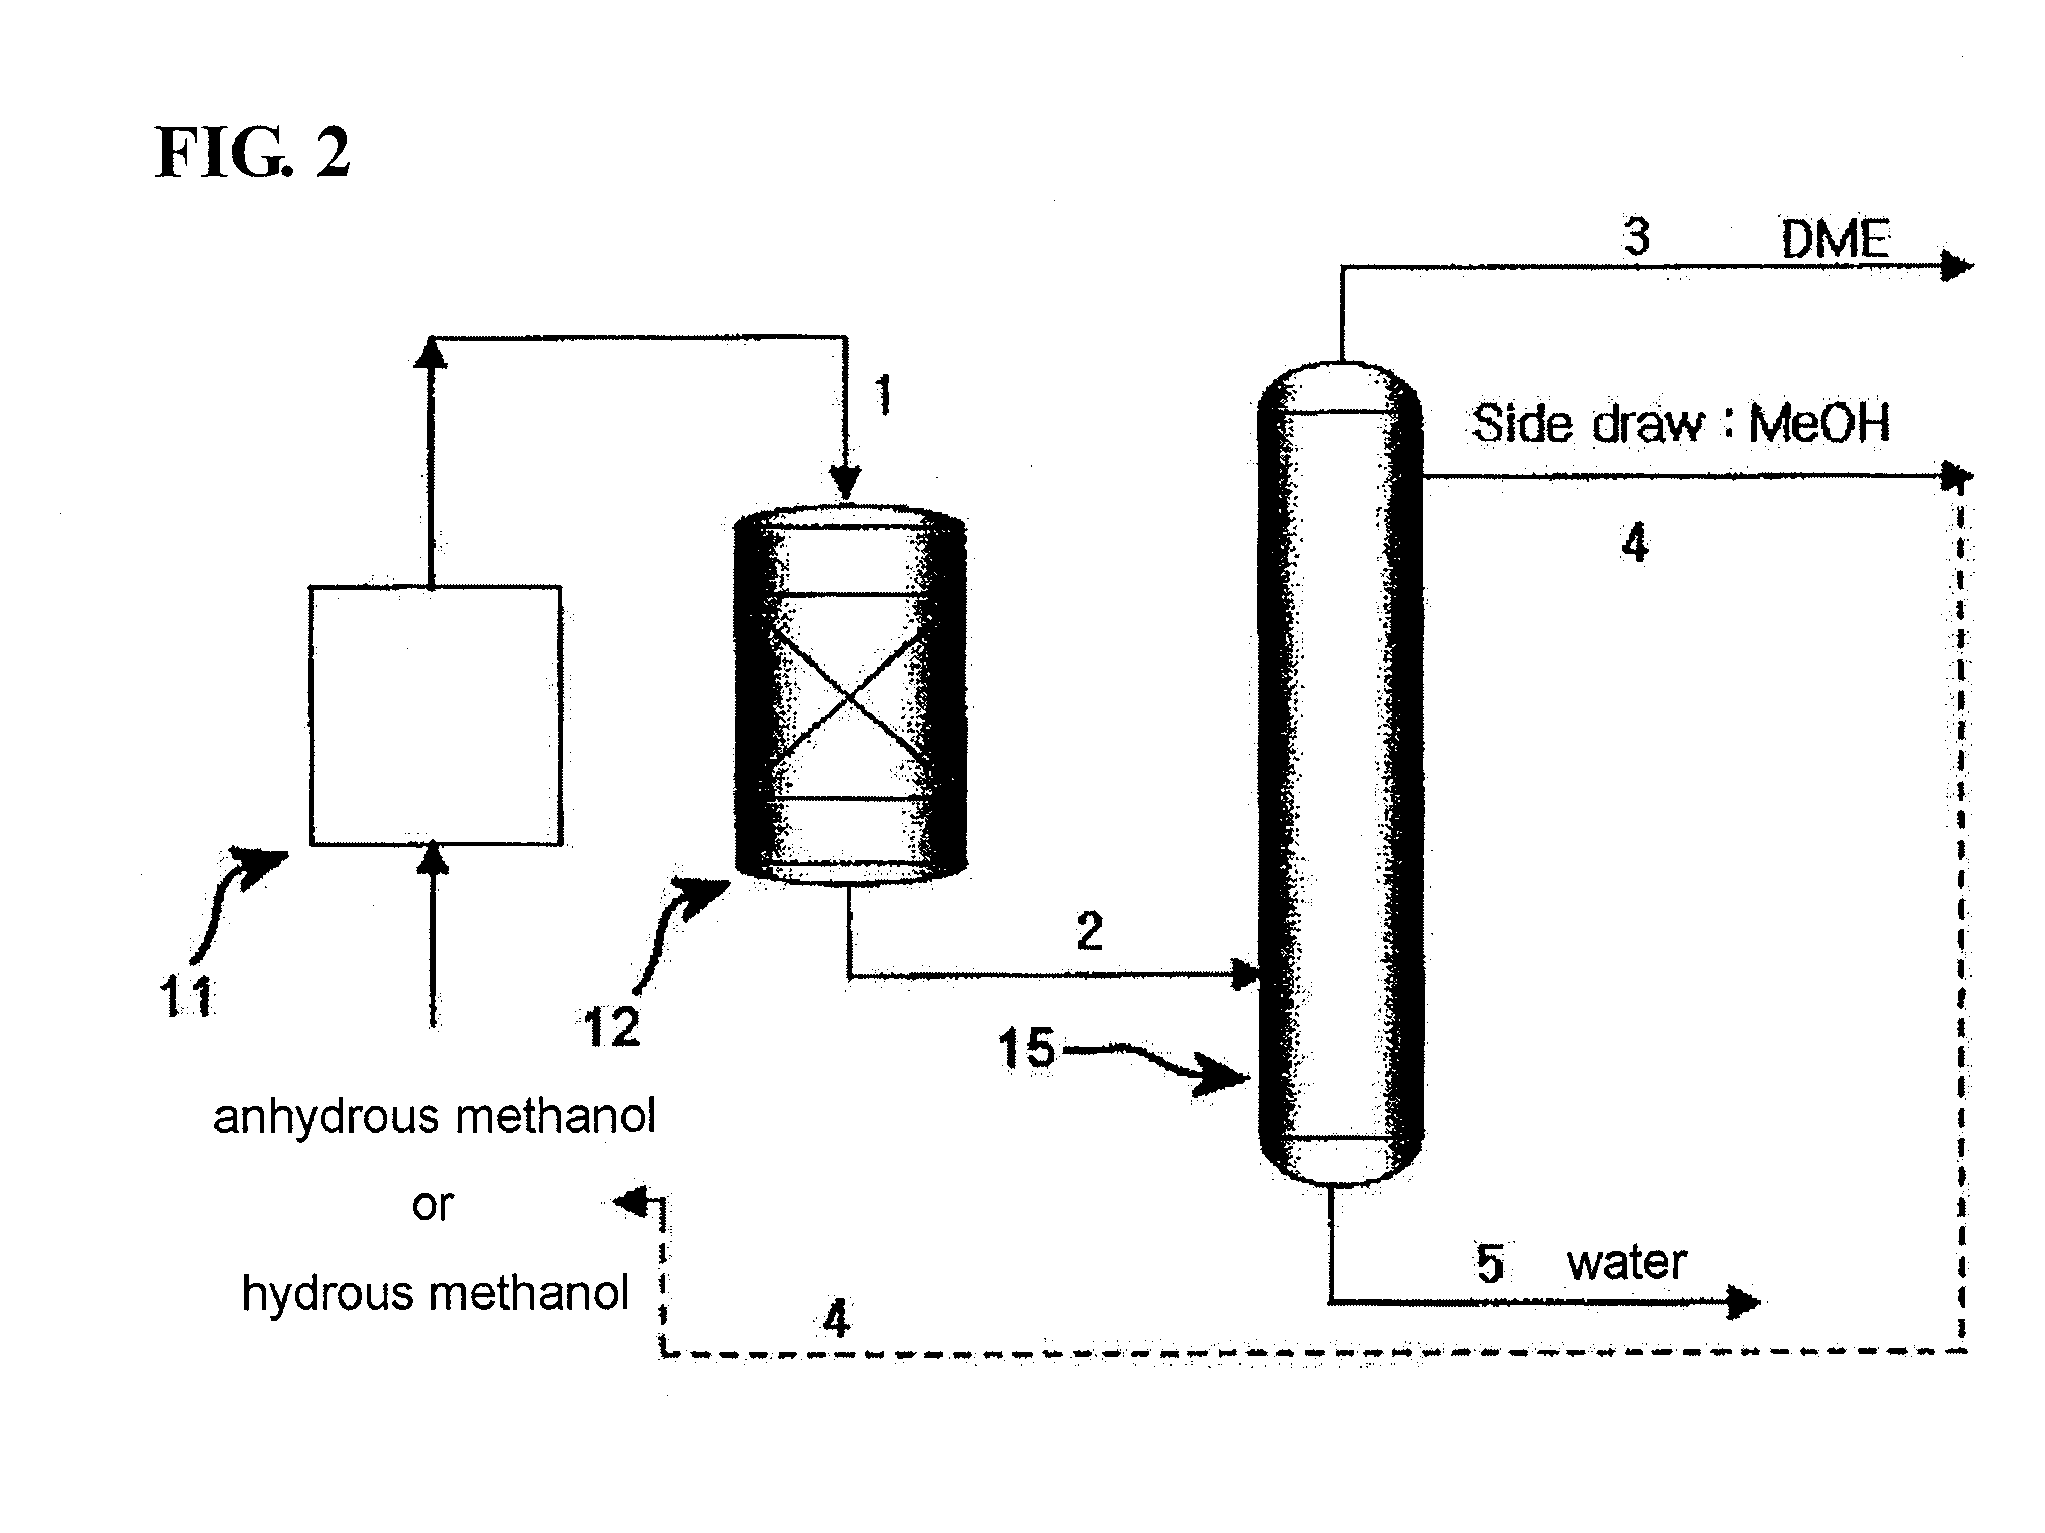 Process for preparing dimethyl ether